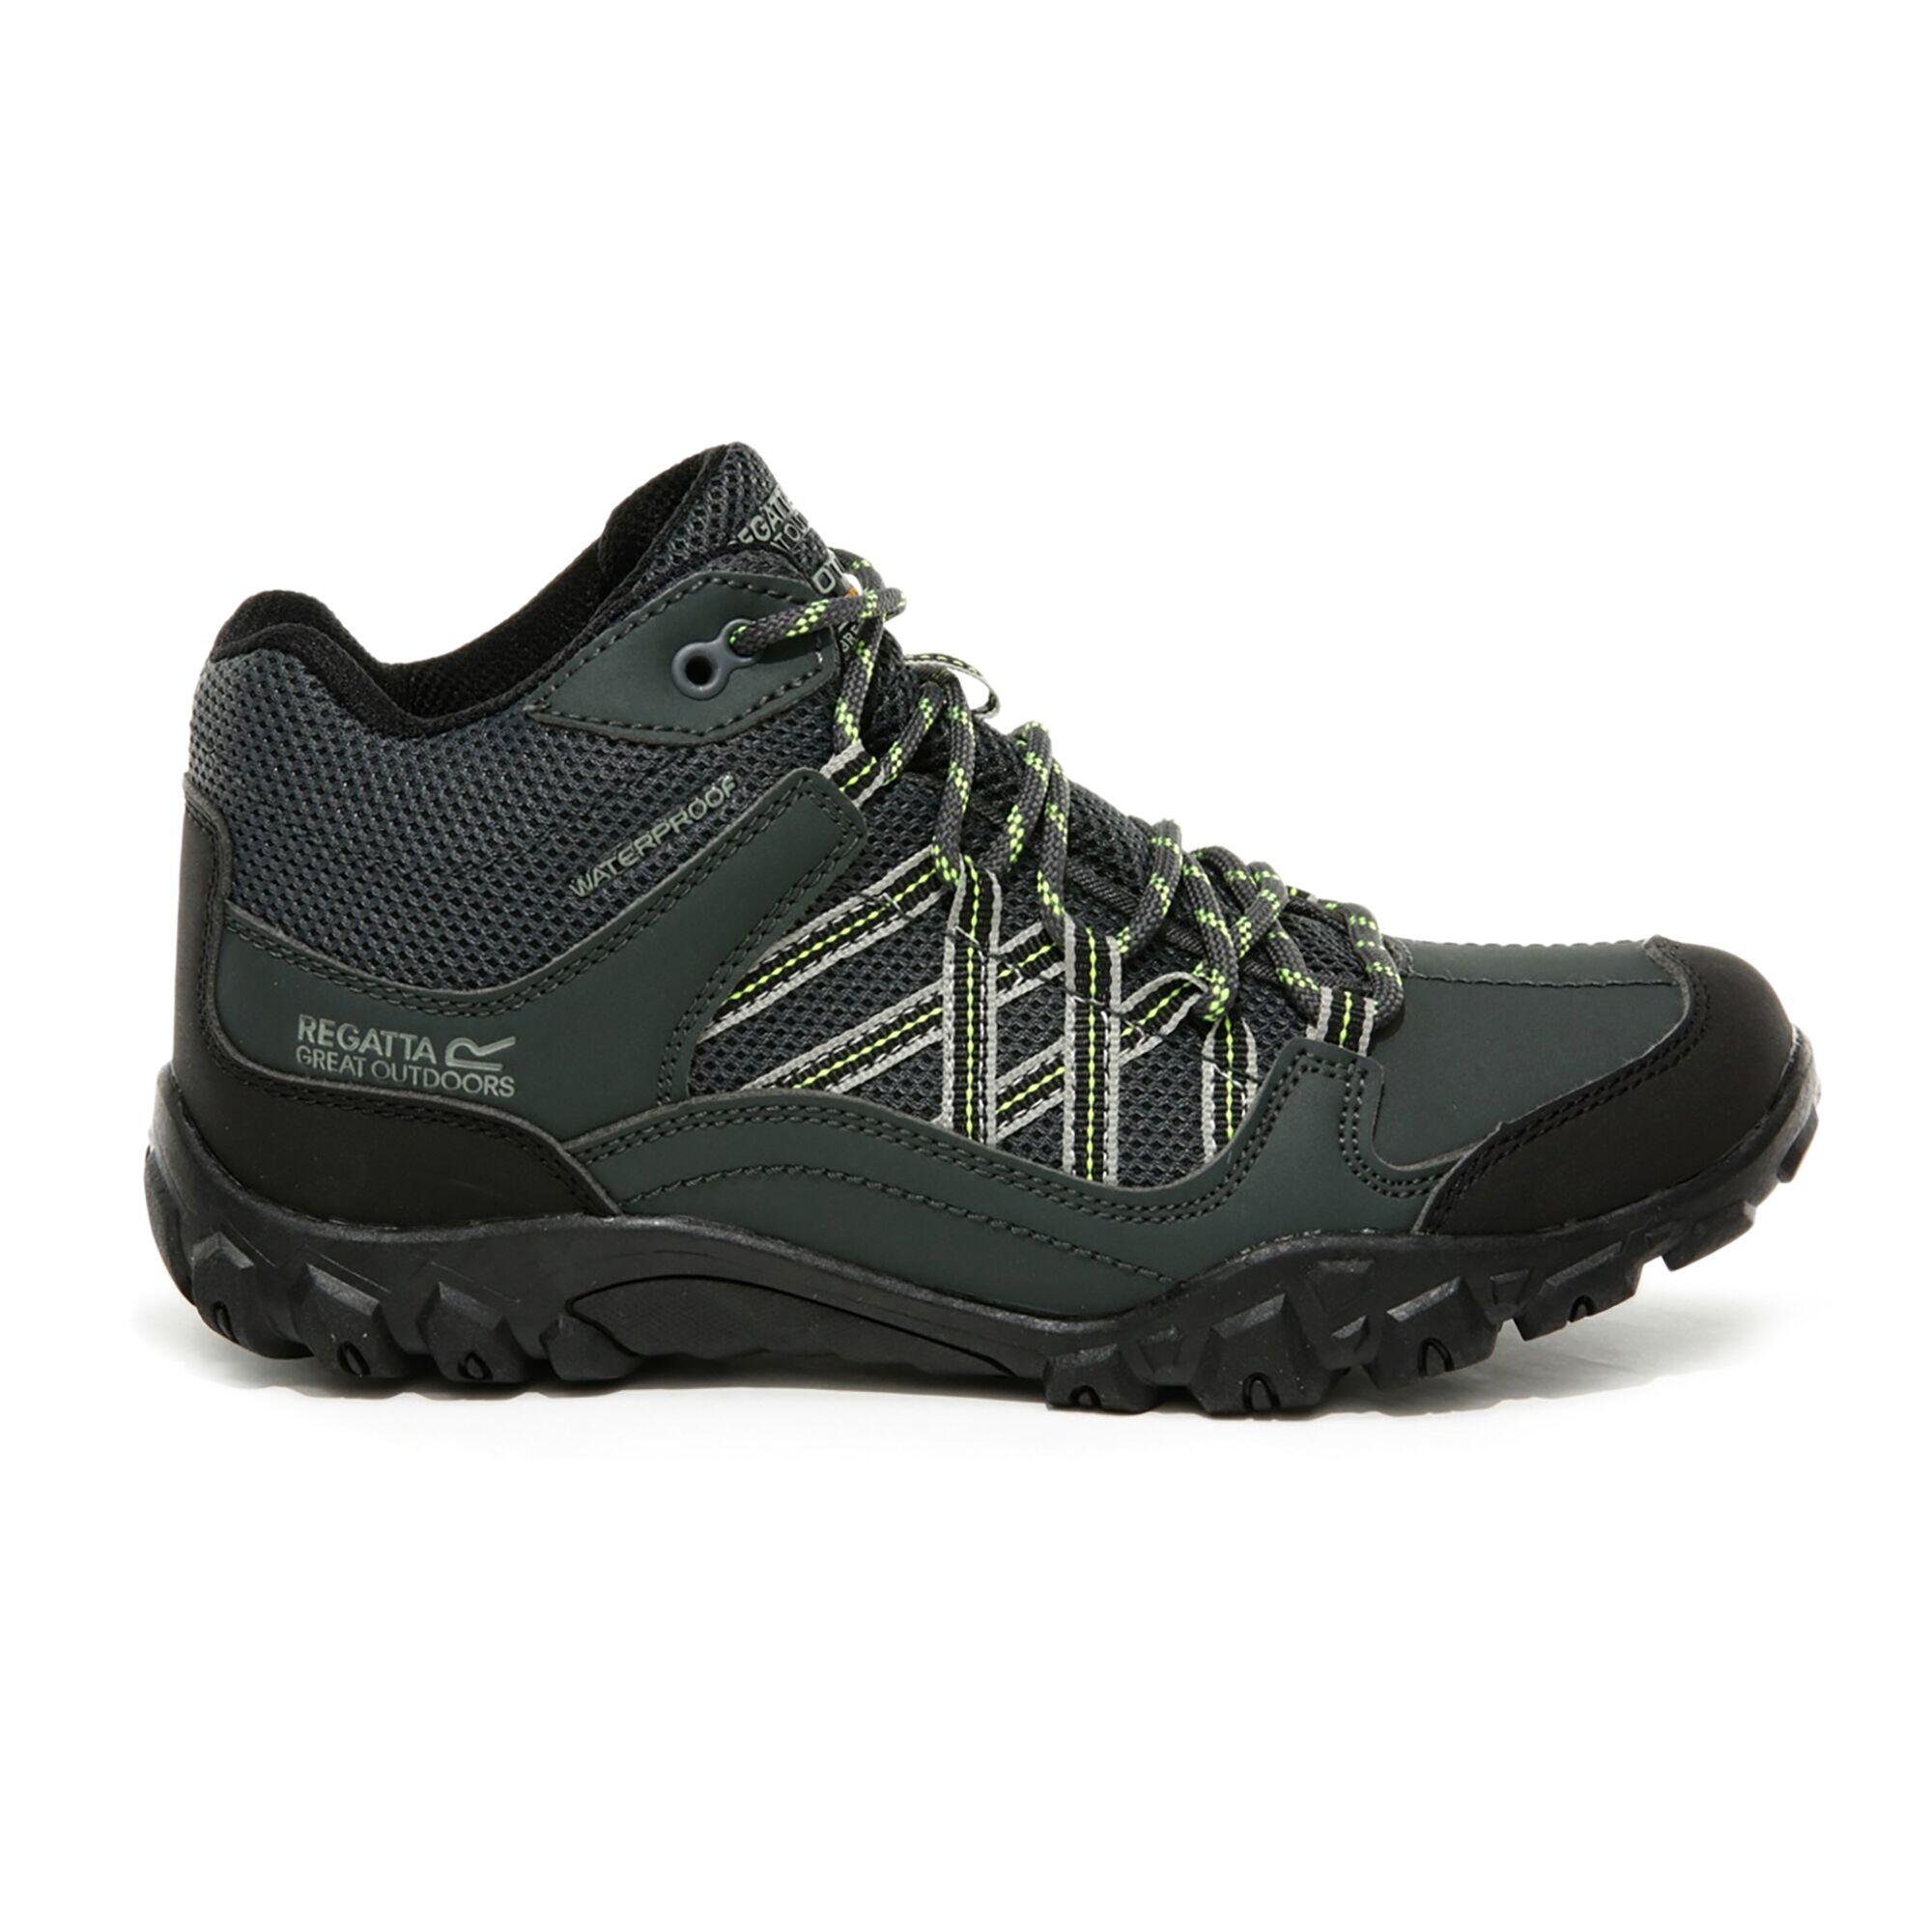 REGATTA Edgepoint Kids' Hiking Waterproof Mid Boots - Grey/Light Green